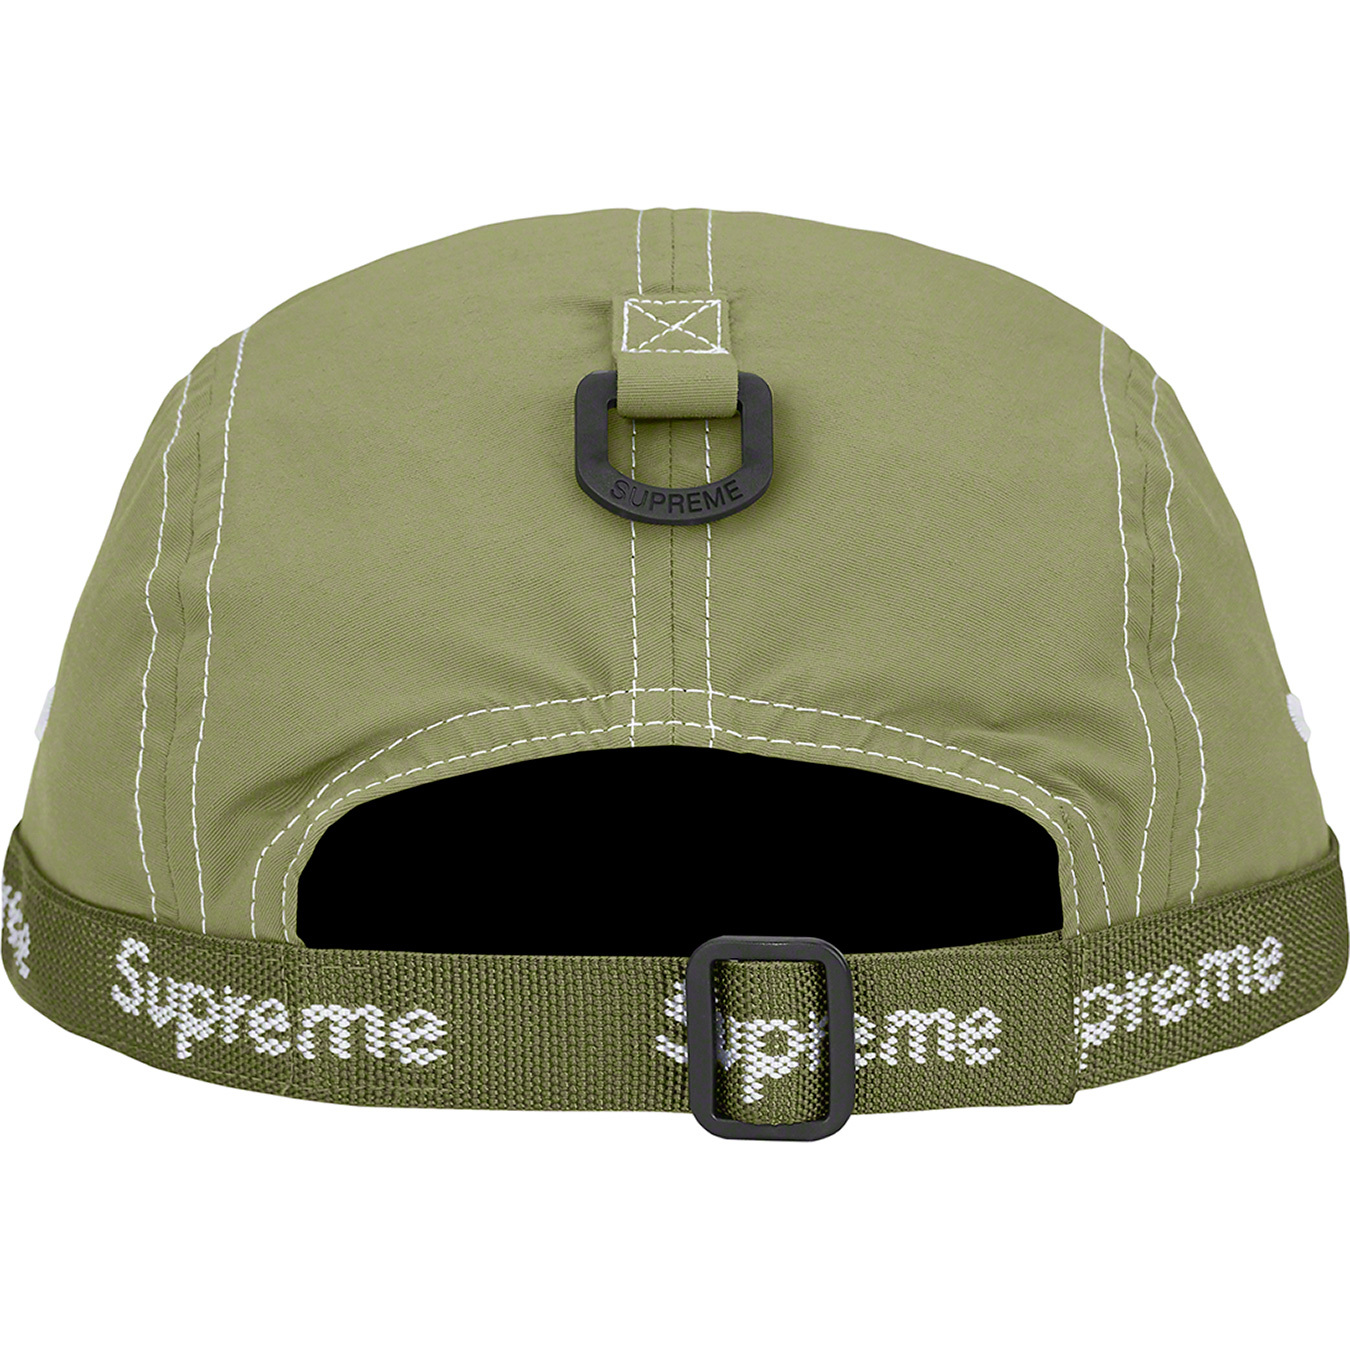 Supreme Webbing Camp Cap